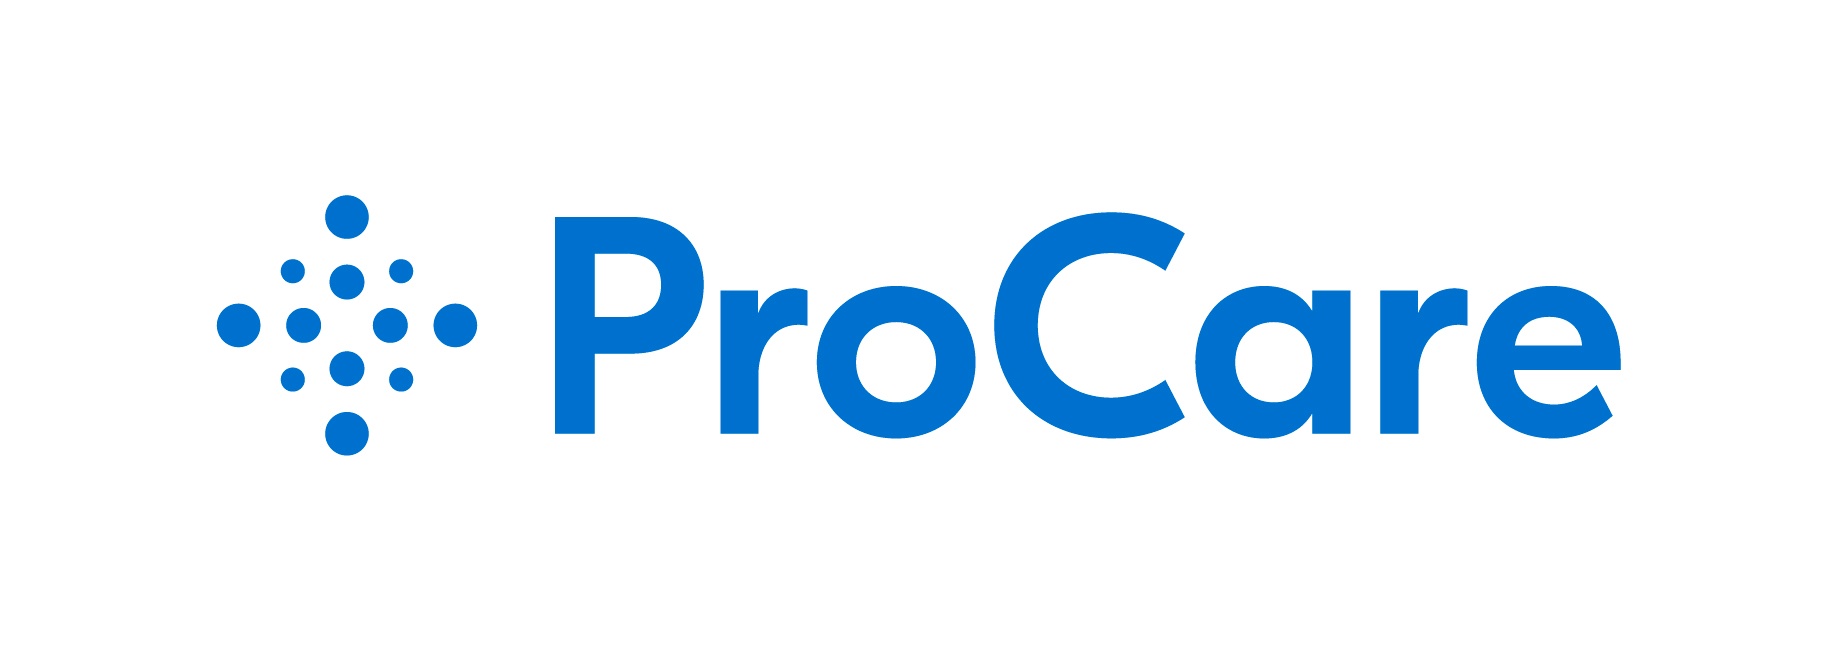 Procare Careers Logo